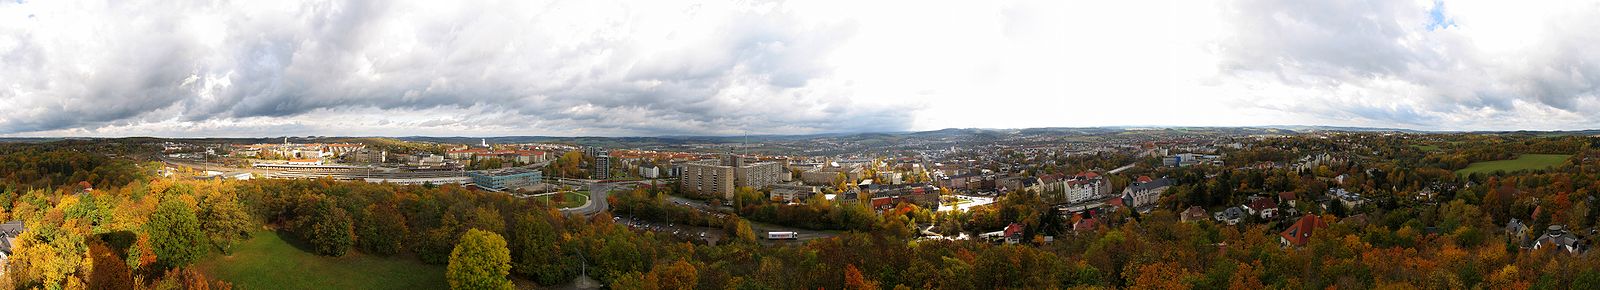 Panoramablick vom Bärensteinturm